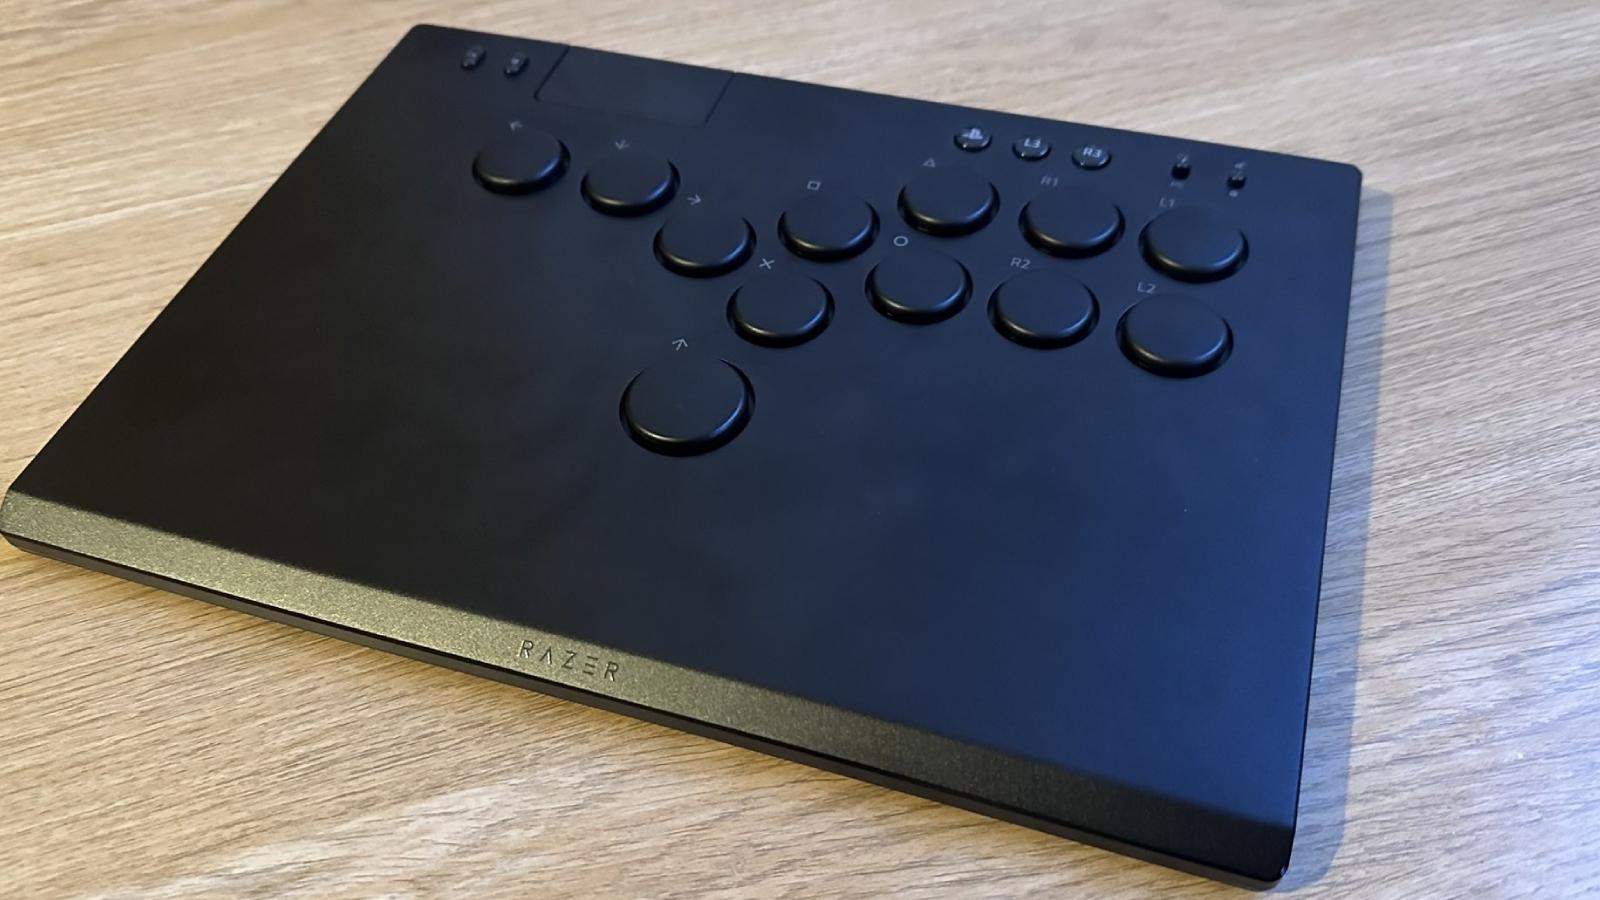 Razer Kitsune - All-Button Optical Arcade Controller for PS5 and PC 